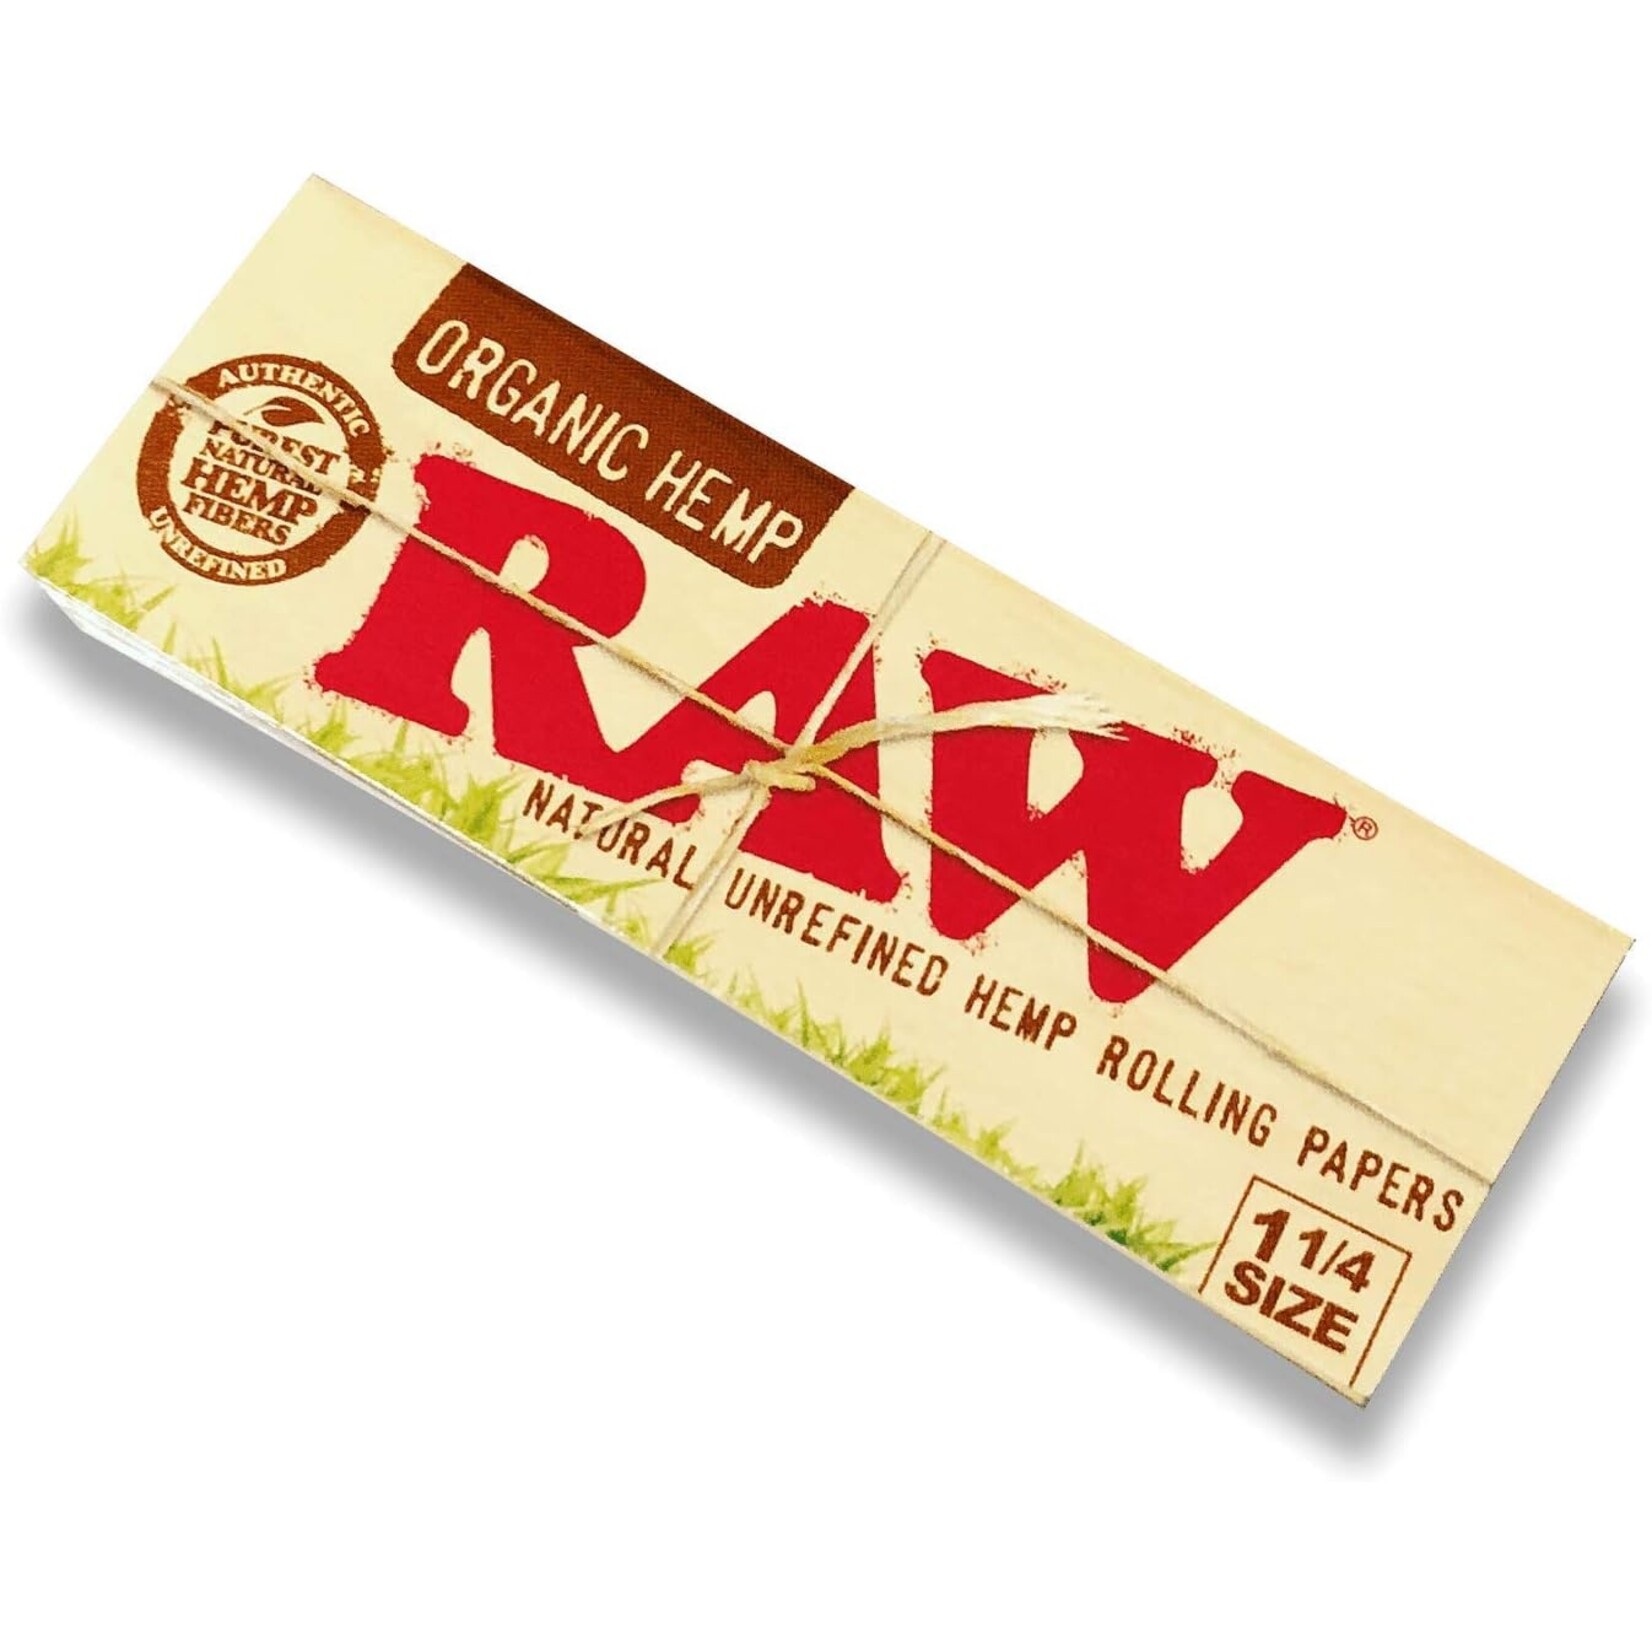 Raw Organic Hemp 1 1/4" Rolling Papers